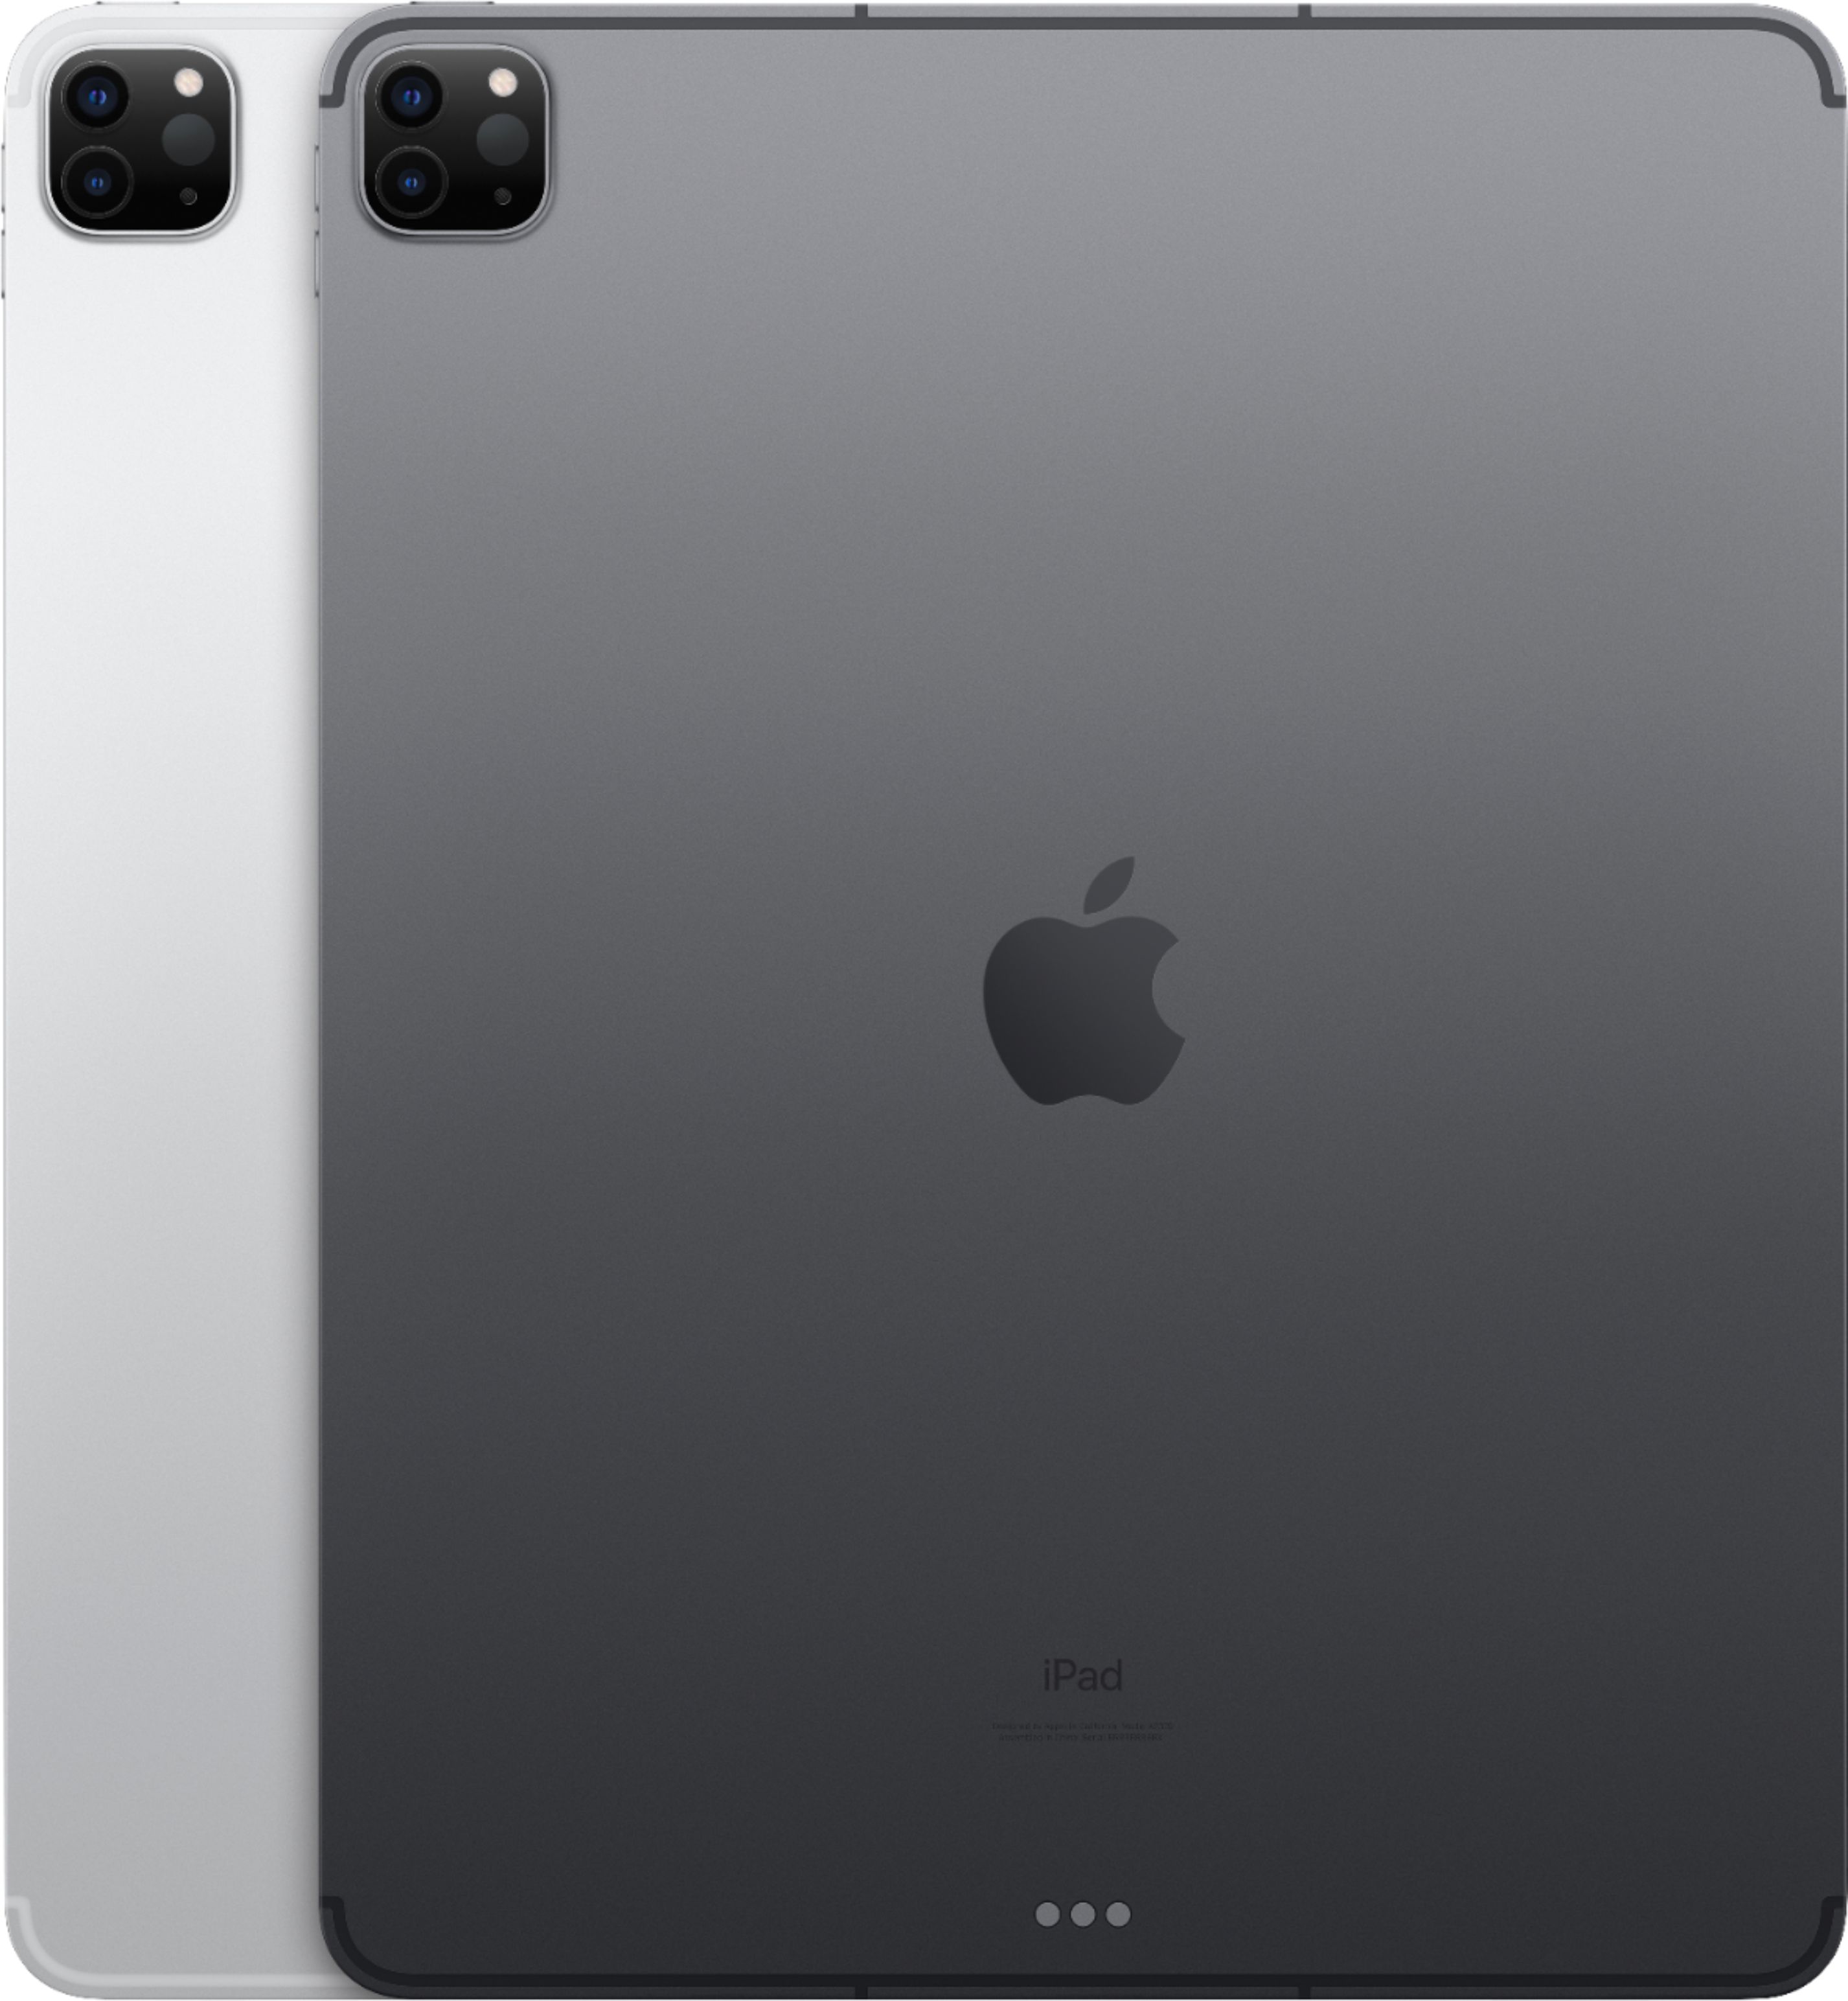 Apple 12.9-Inch iPad Pro with Wi-Fi + Cellular 256GB (Unlocked 